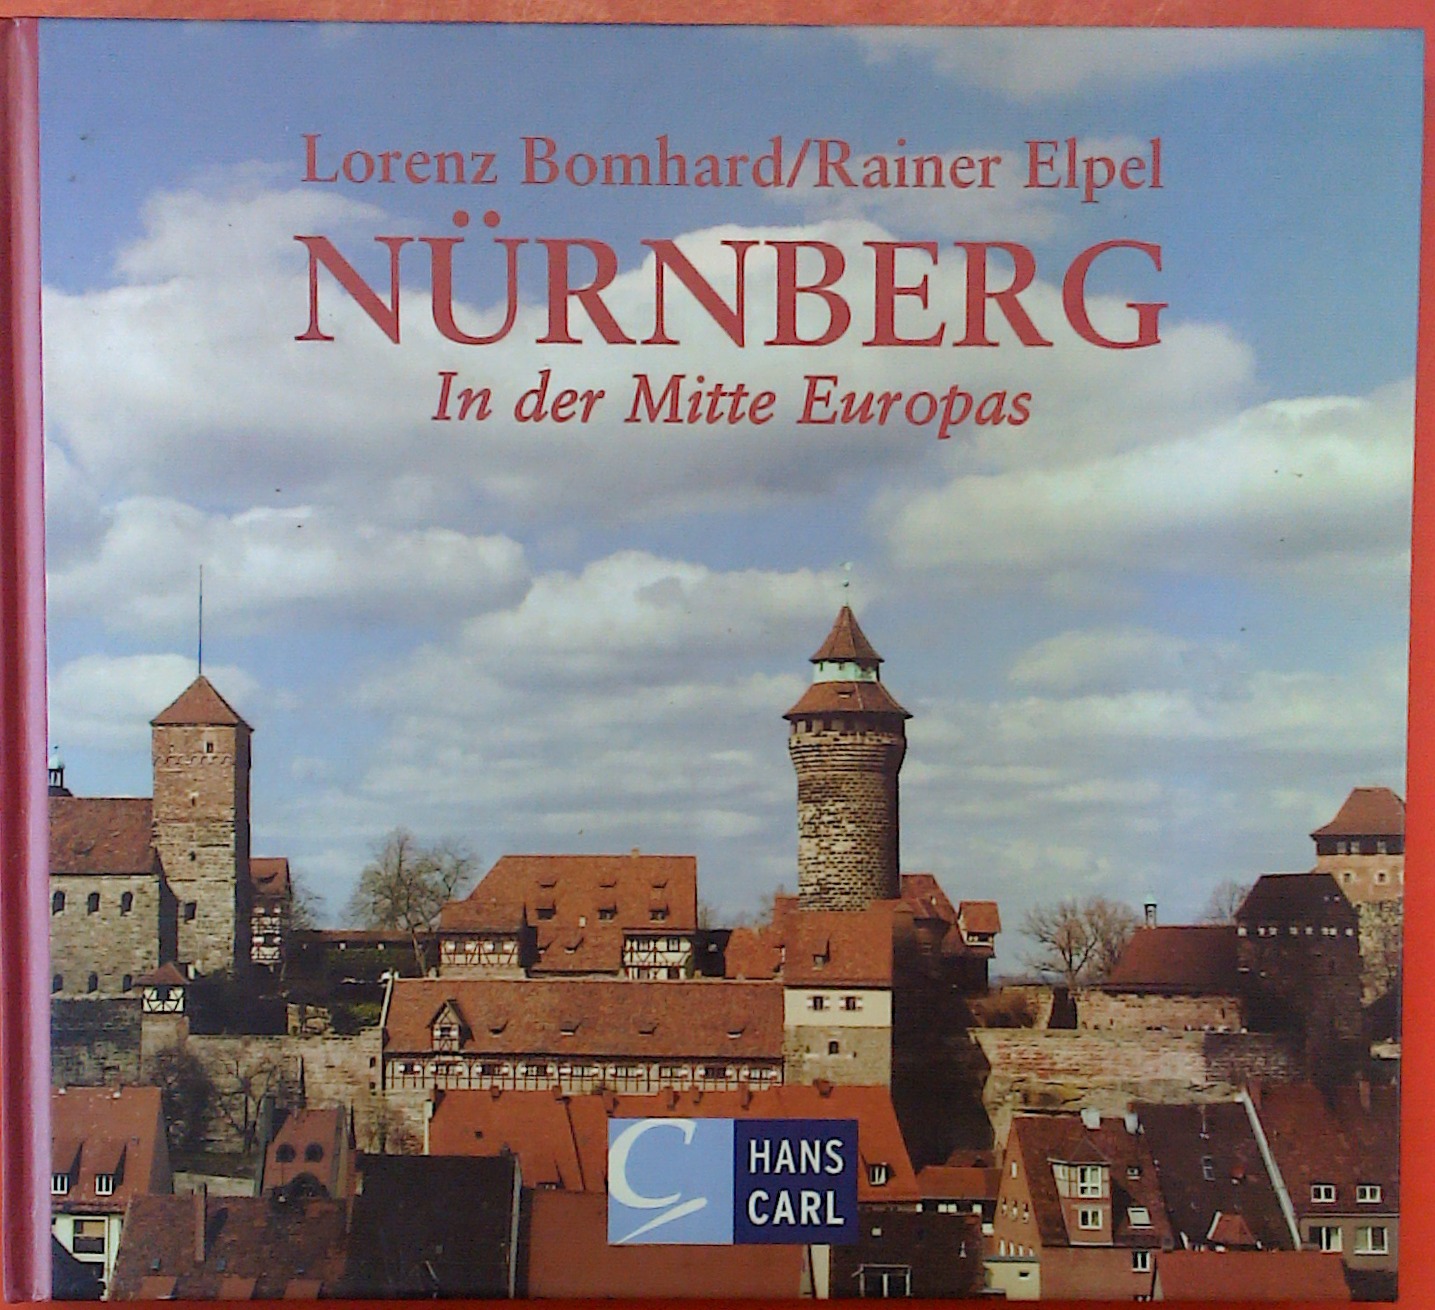 Nürnberg . In der Mitte Europas - Lorenz Bomhard/Rainer Elpel